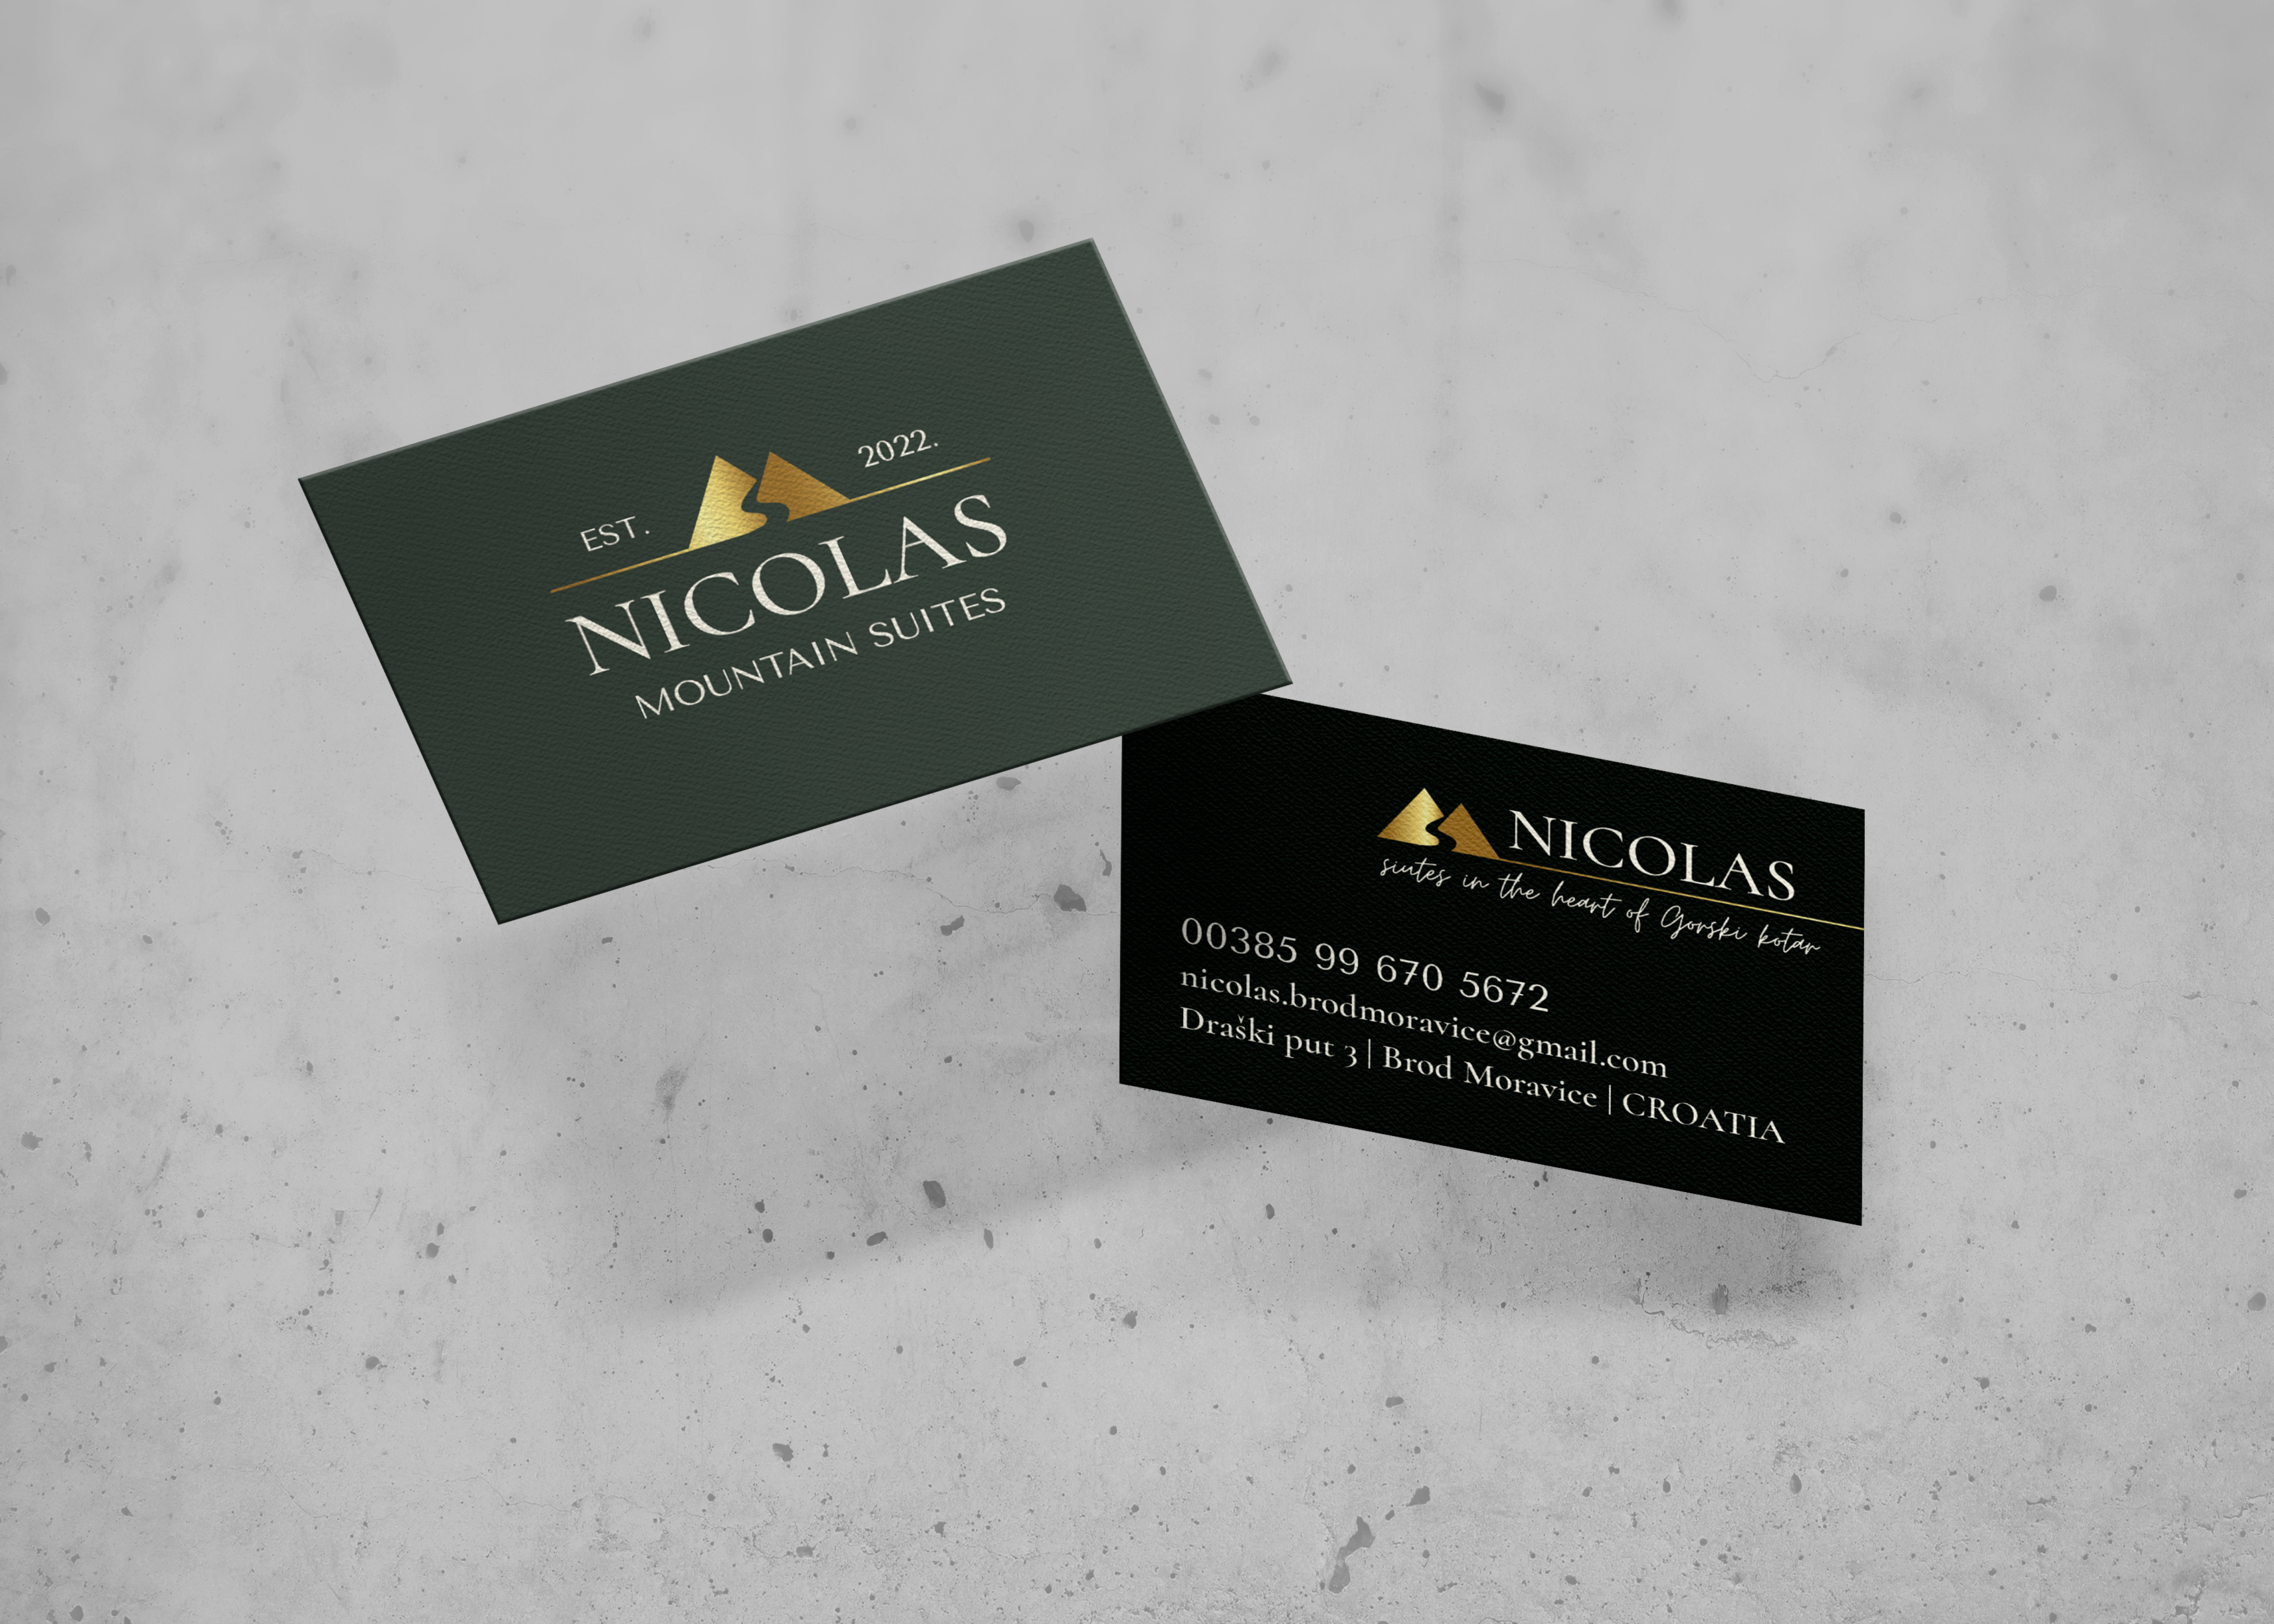 dizajn promotivnog materijala: NICOLAS Mountain Suites